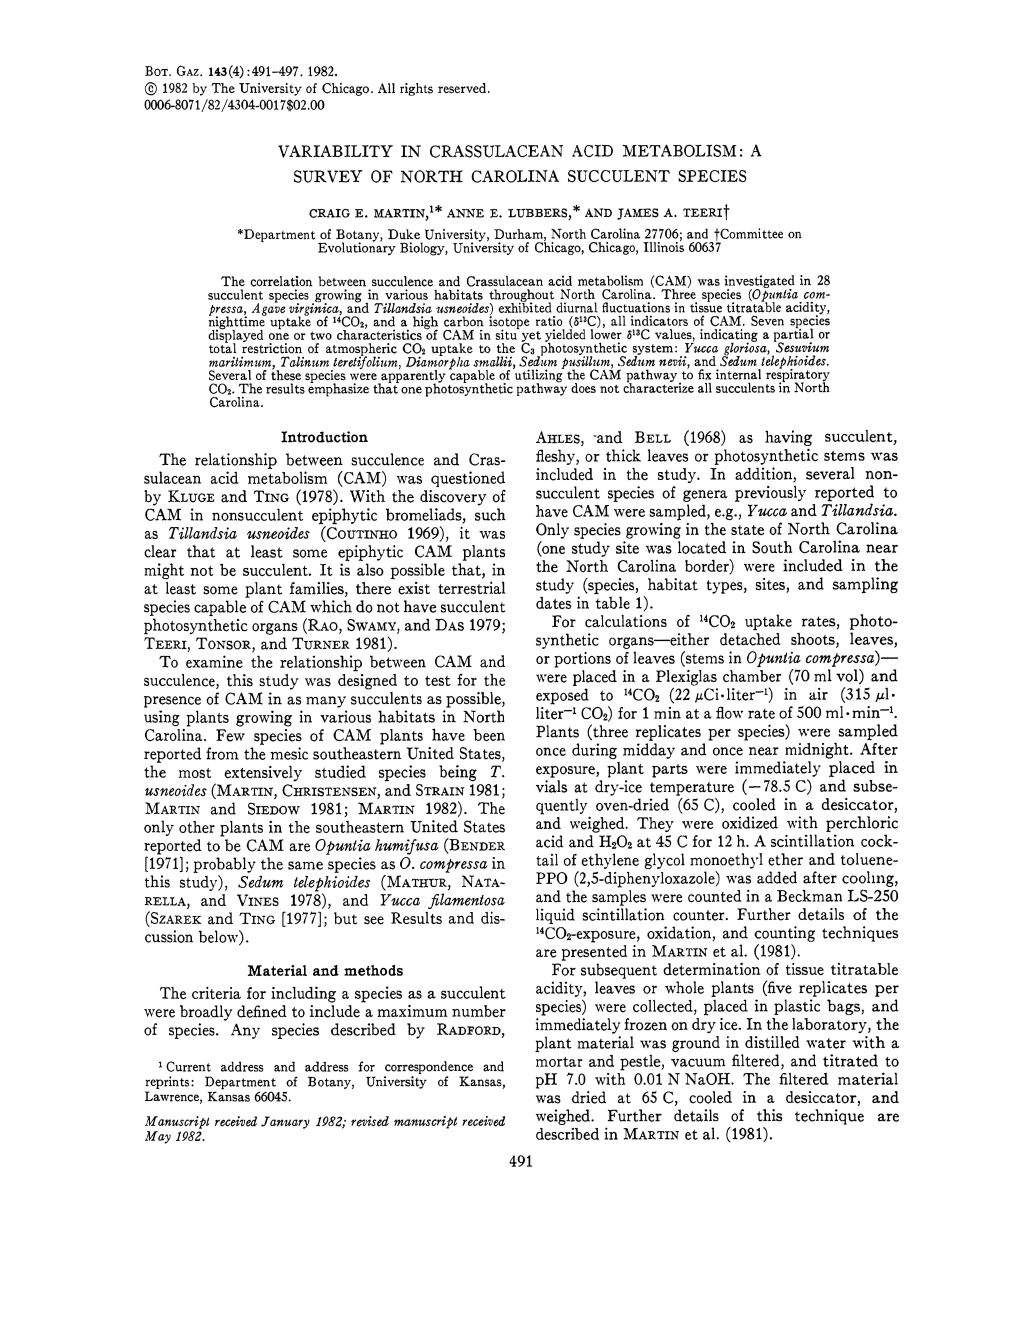 Variability in Crassulacean Acid Metabolism: a Survey of North Carolina Succulent Species